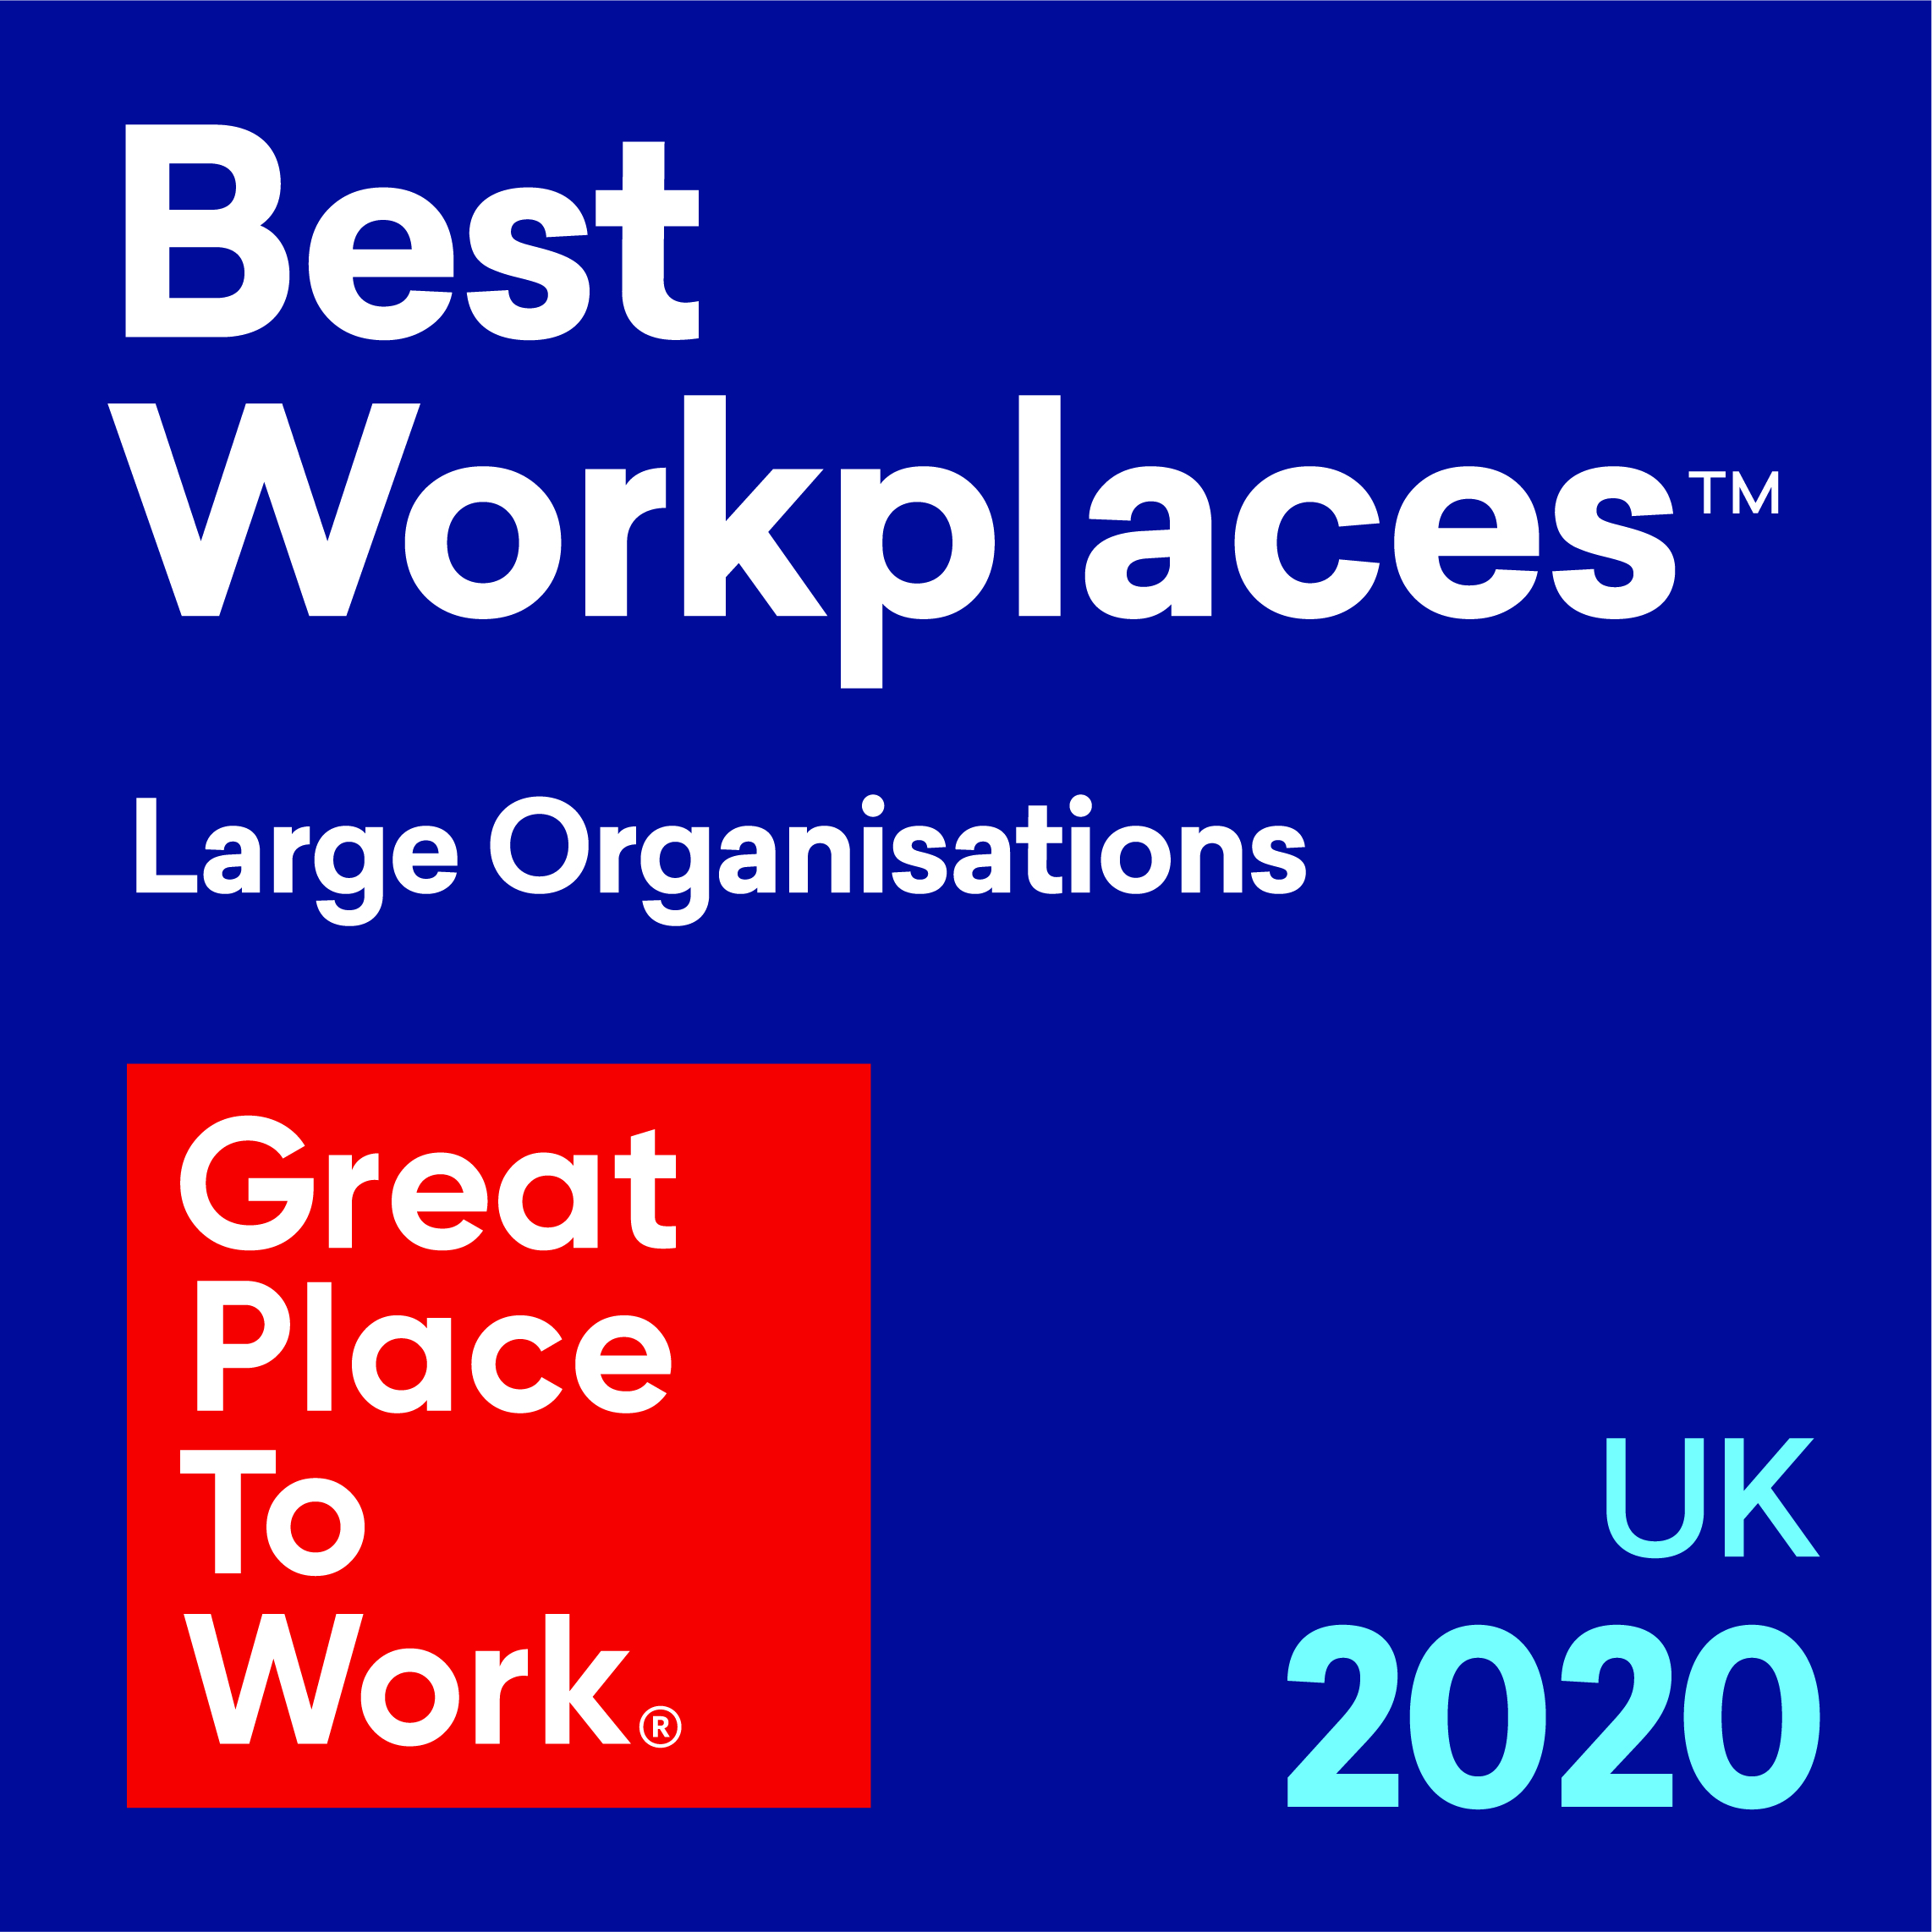 Best Workplace UK Accreditation